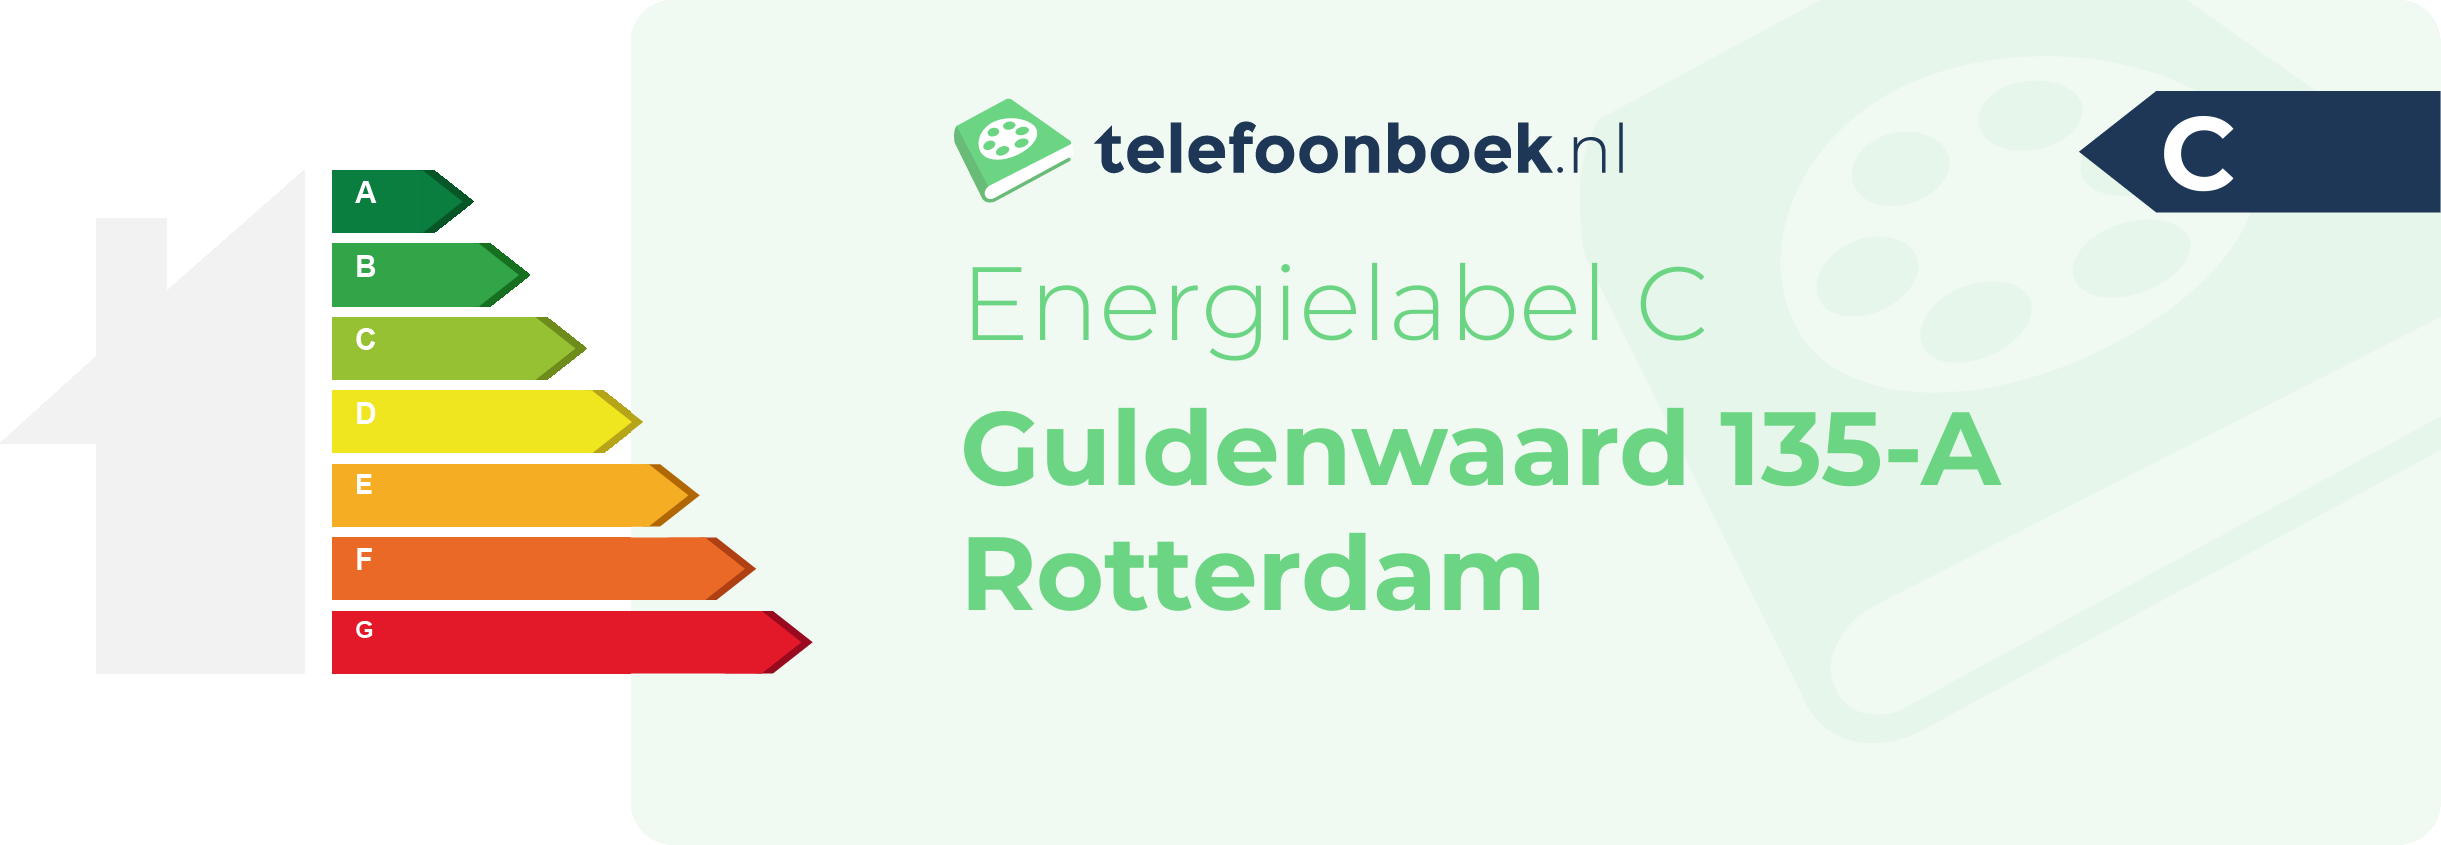 Energielabel Guldenwaard 135-A Rotterdam